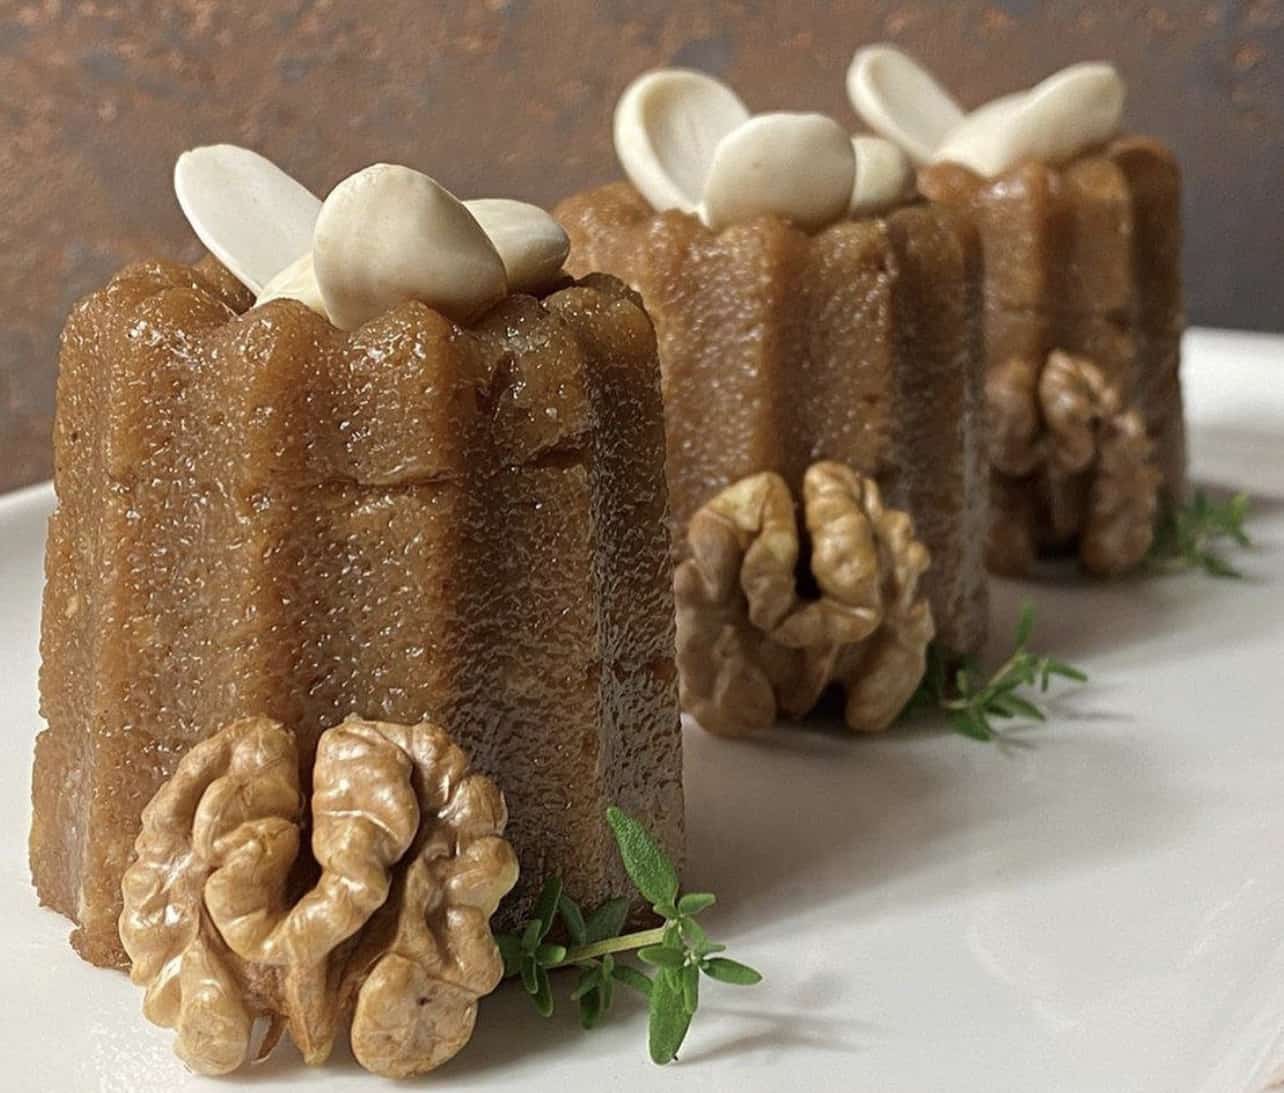 Greek Halva Recipe: Semolina Pudding With Raisins And Nuts